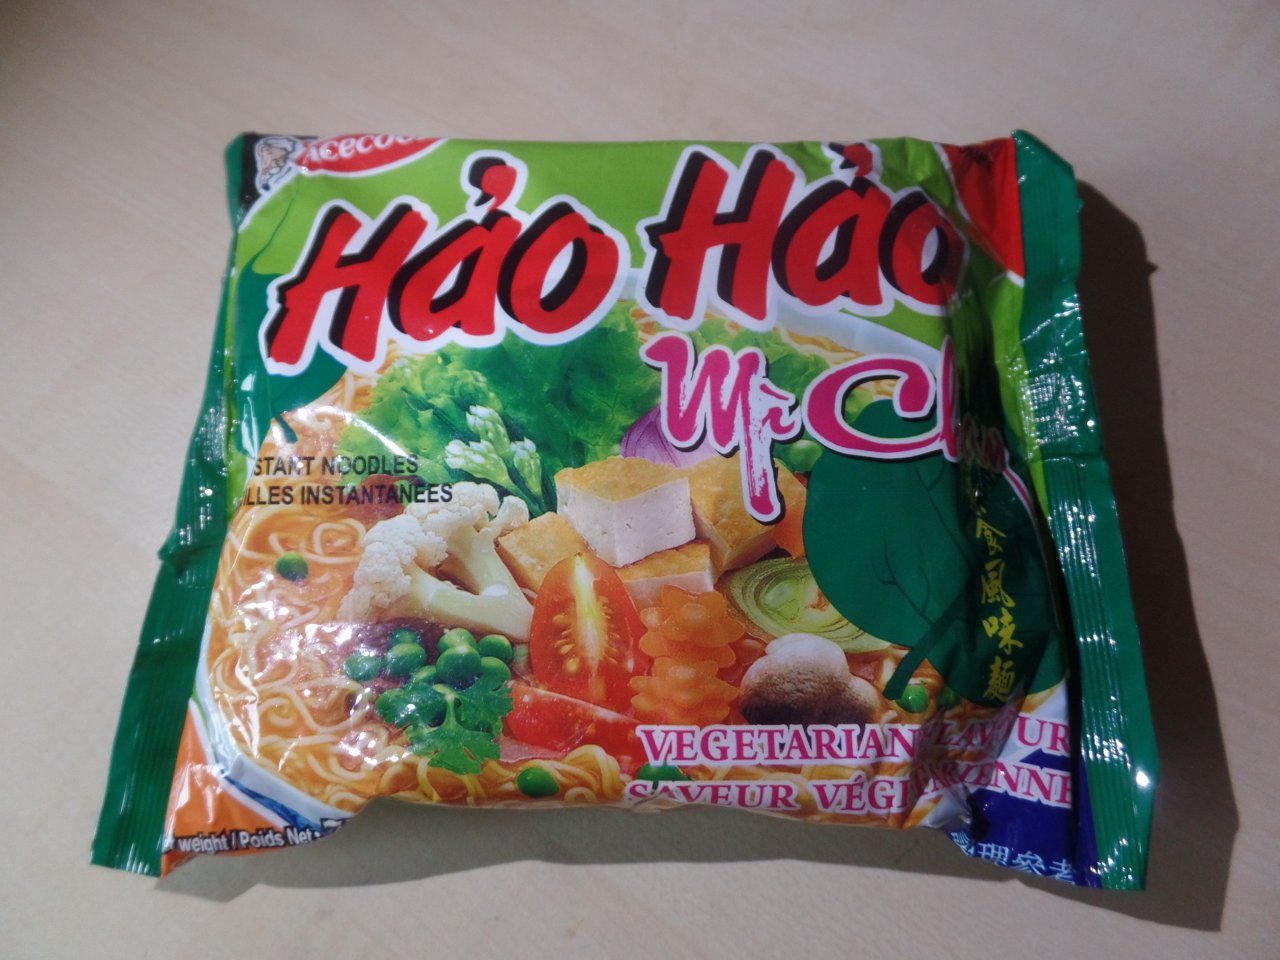 #1465: Acecook Hảo Hảo "Mi Chay Instant Noodles Vegetarian Flavour" (Update 2021)